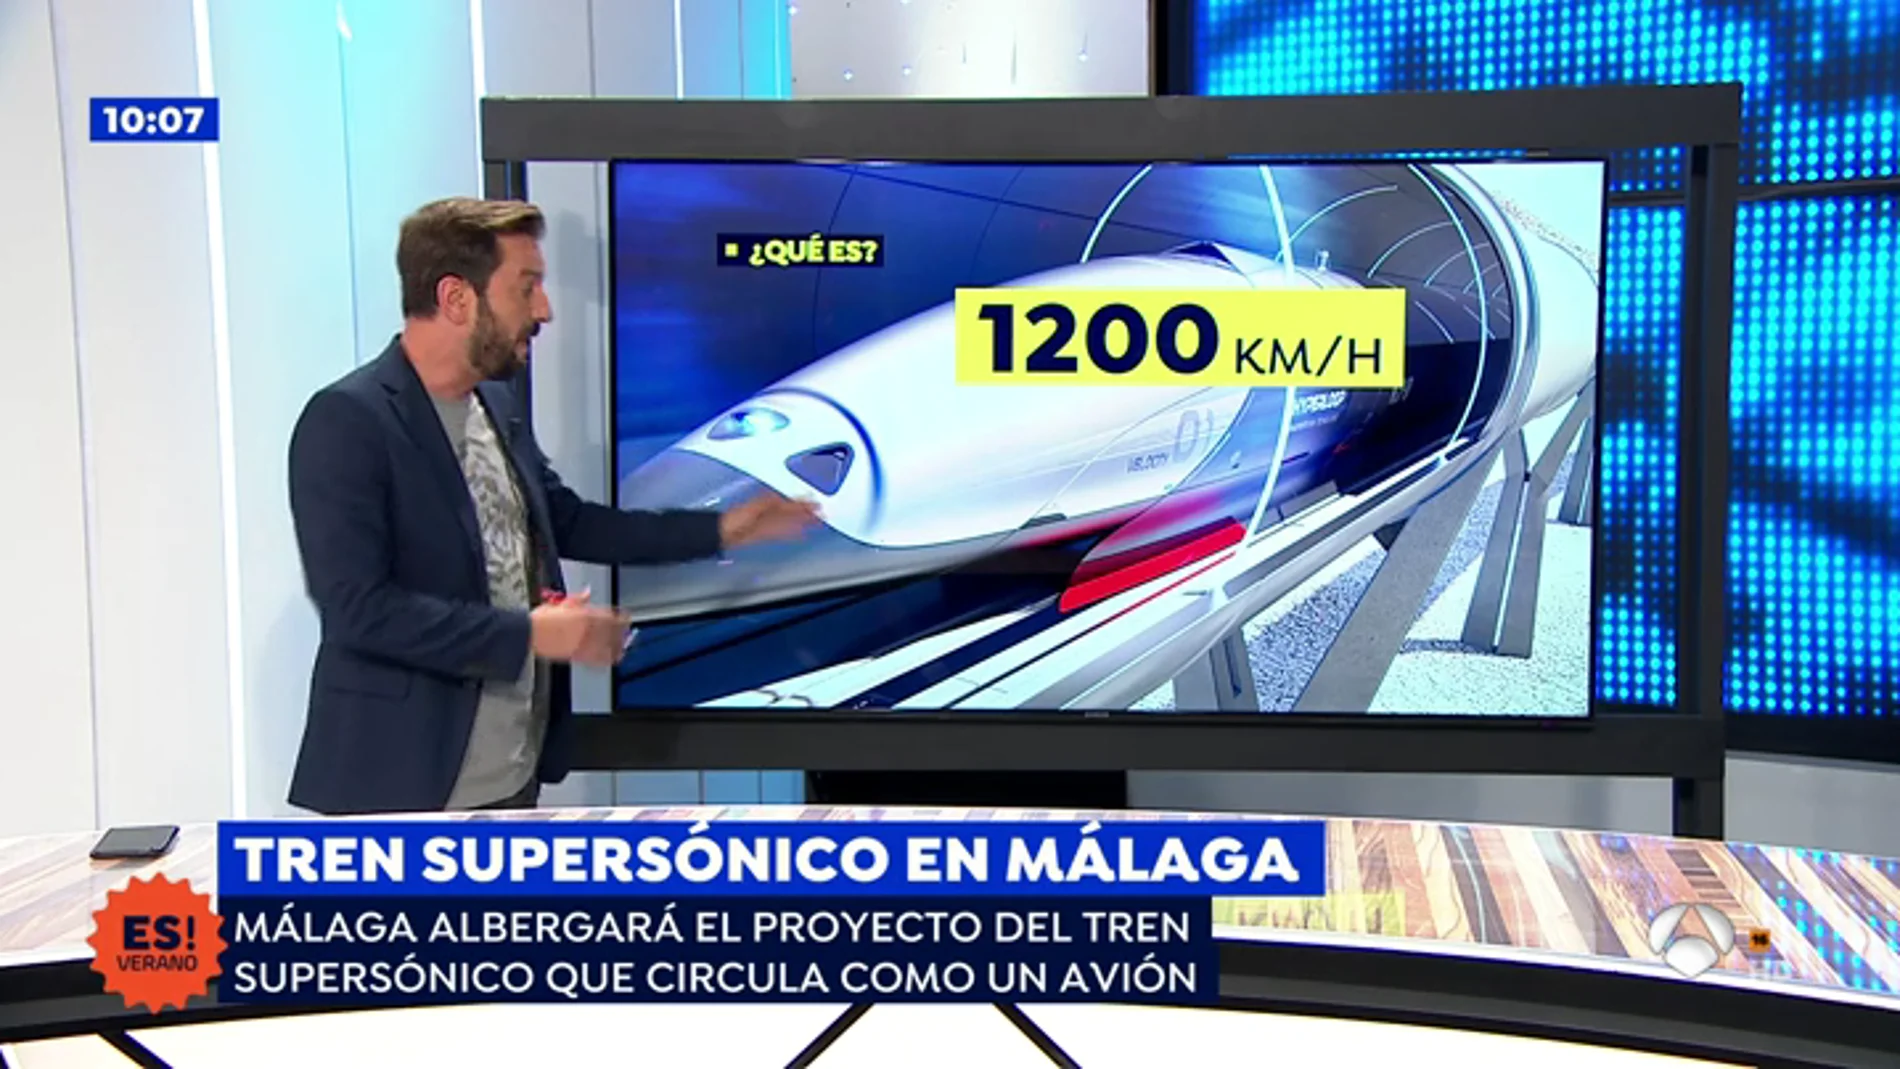 El transporte del futuro llega a Antequera, Málaga